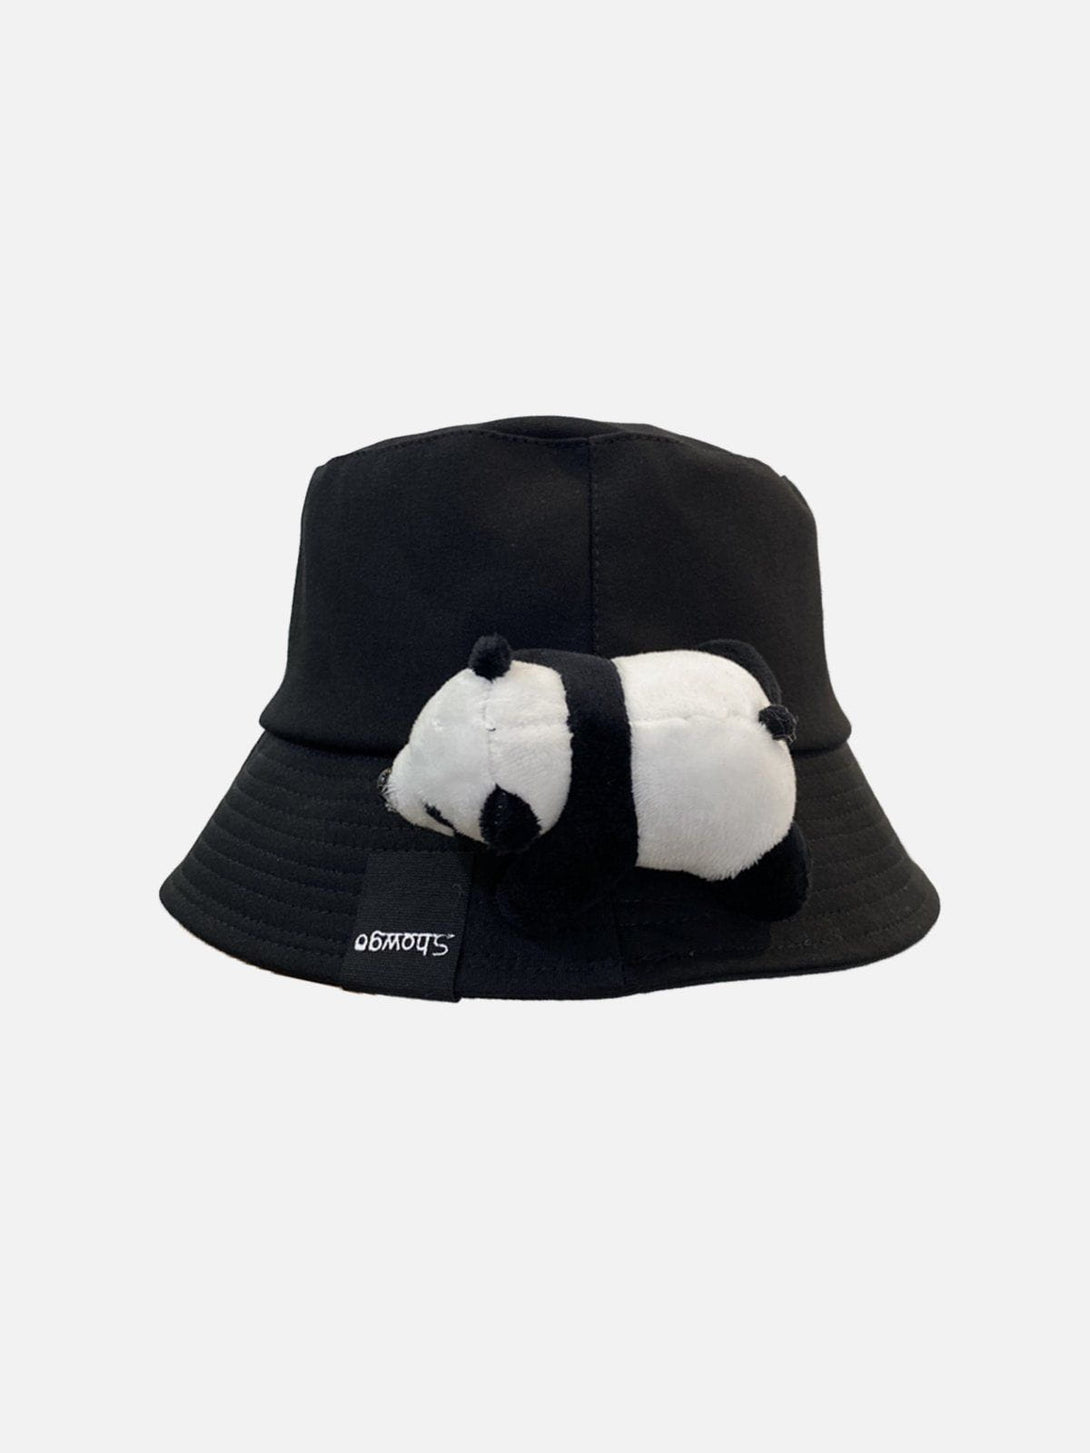 Majesda® - Cartoon Cute 3D Panda Hat- Outfit Ideas - Streetwear Fashion - majesda.com